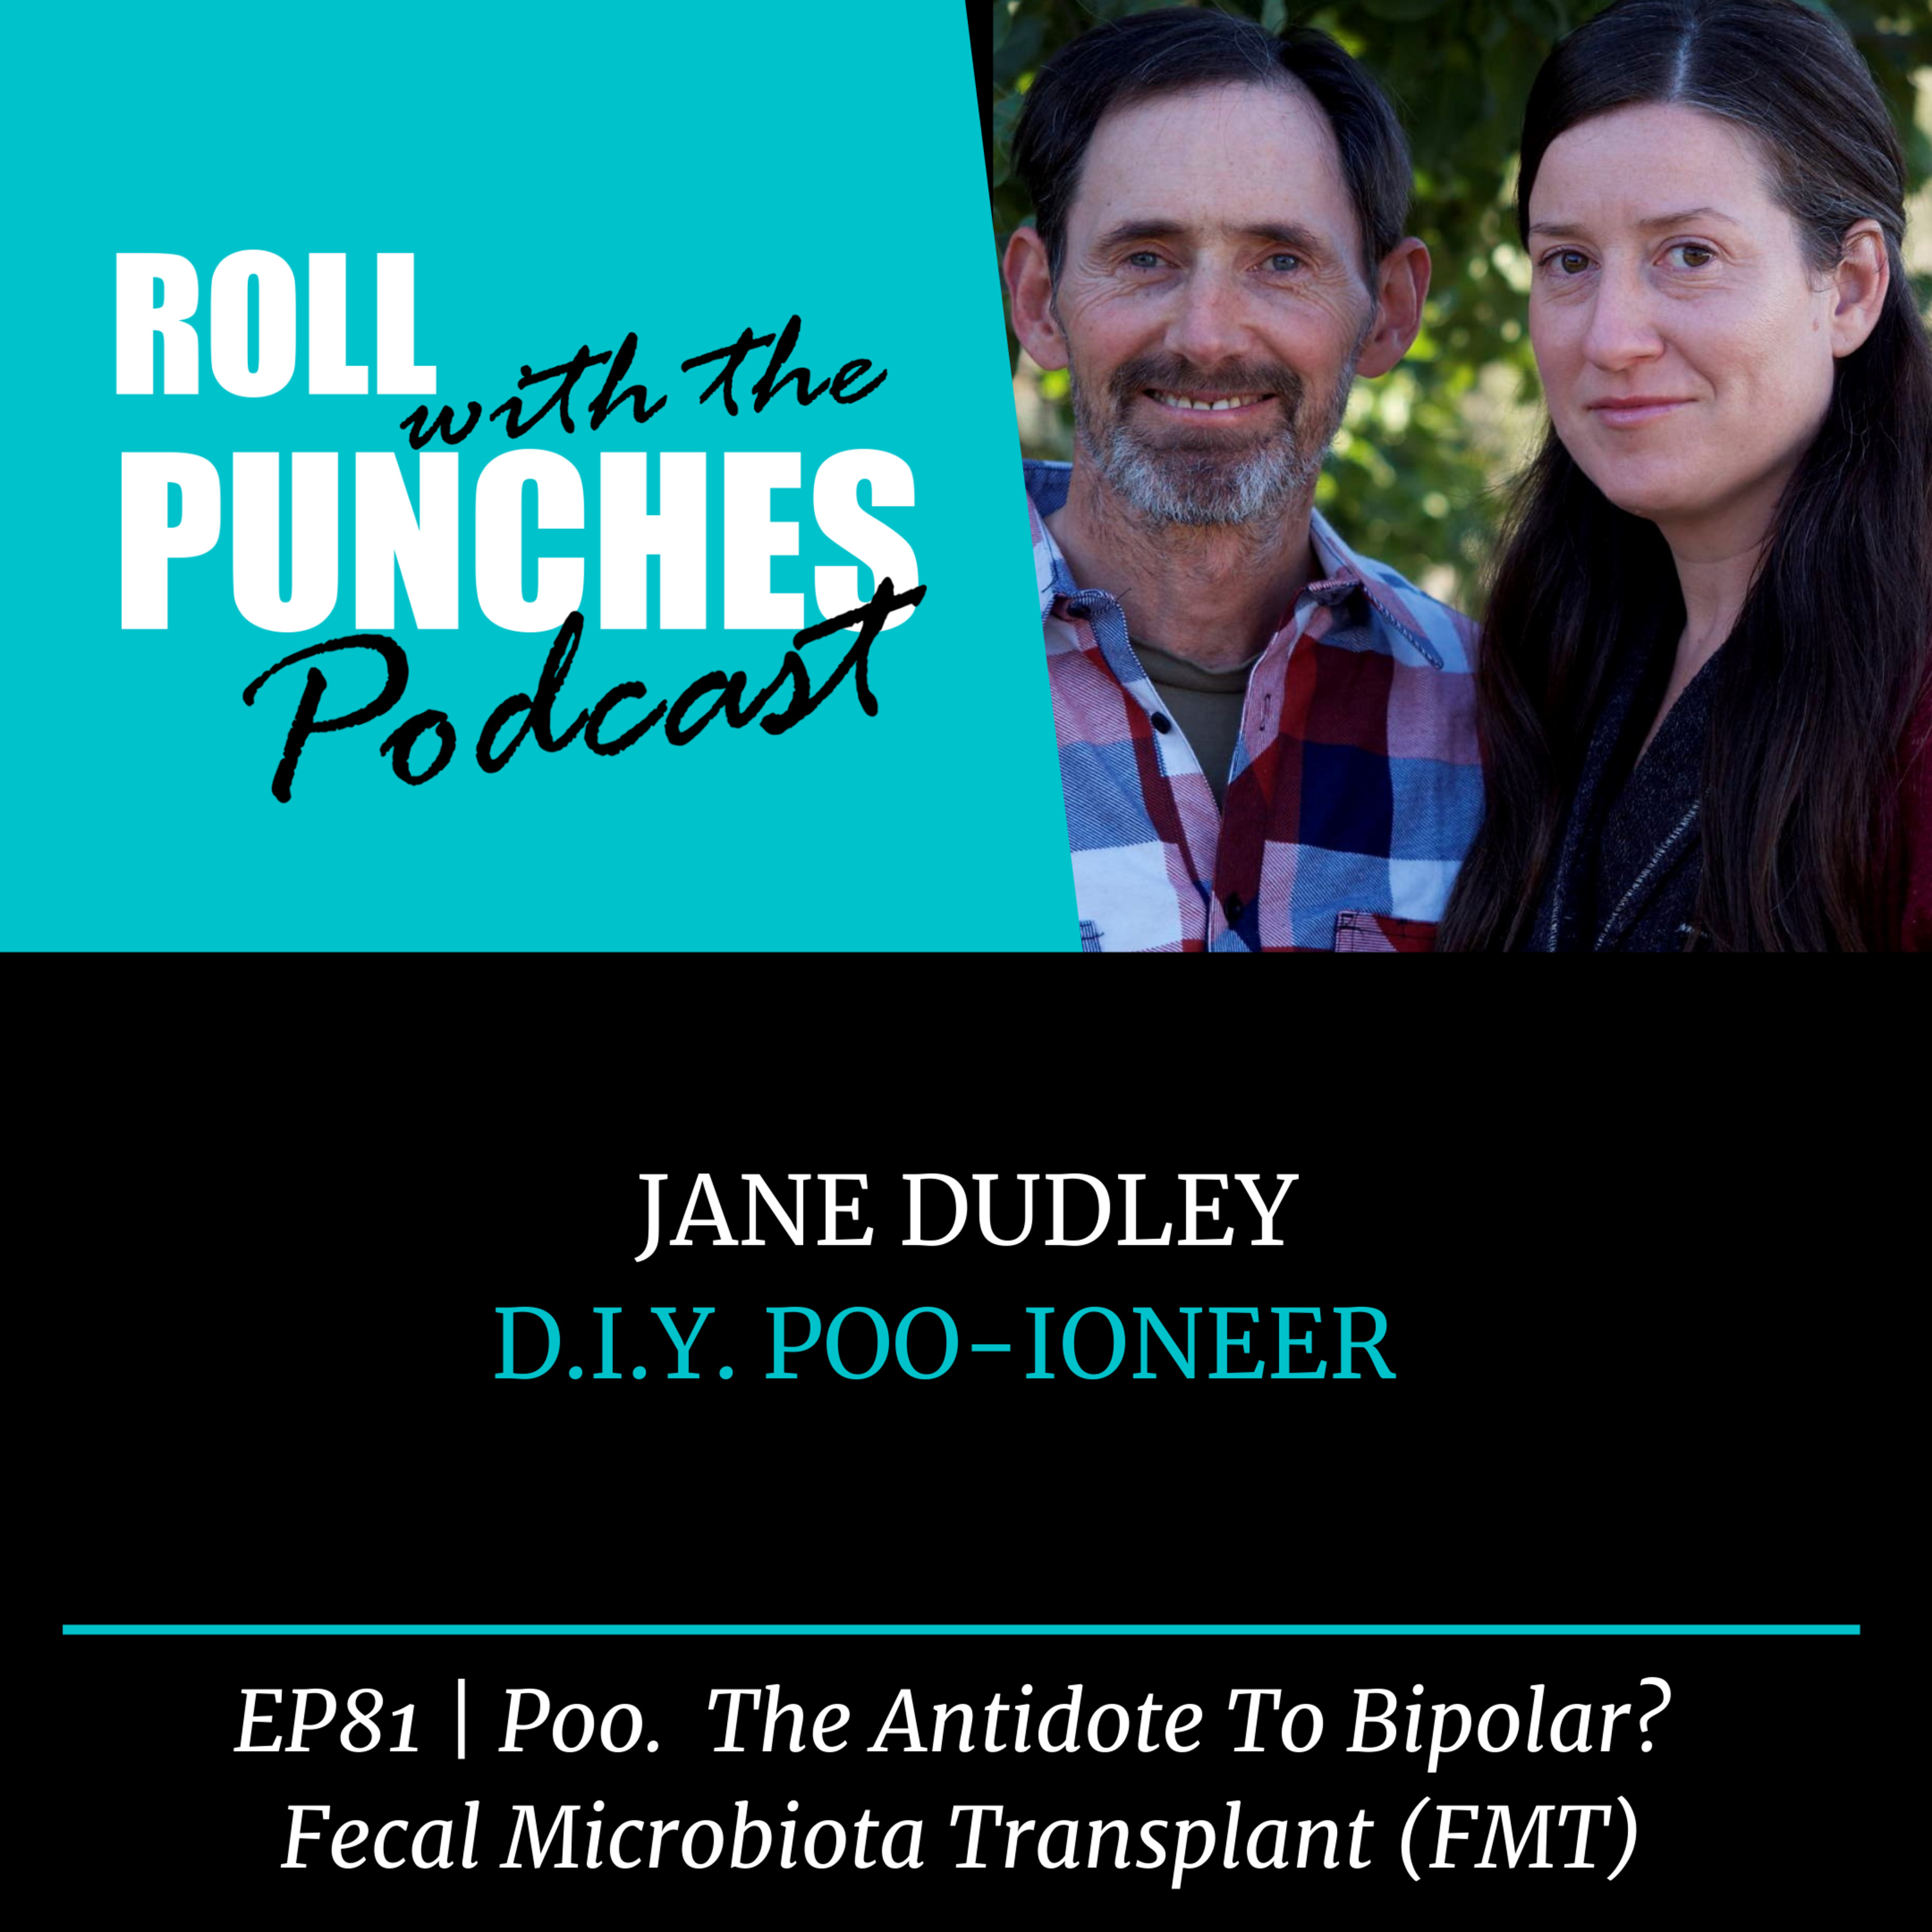 EP81 Poo. The Antidote To Bipolar? (FMT) Fecal Microbiota Transplant | Jane Dudley